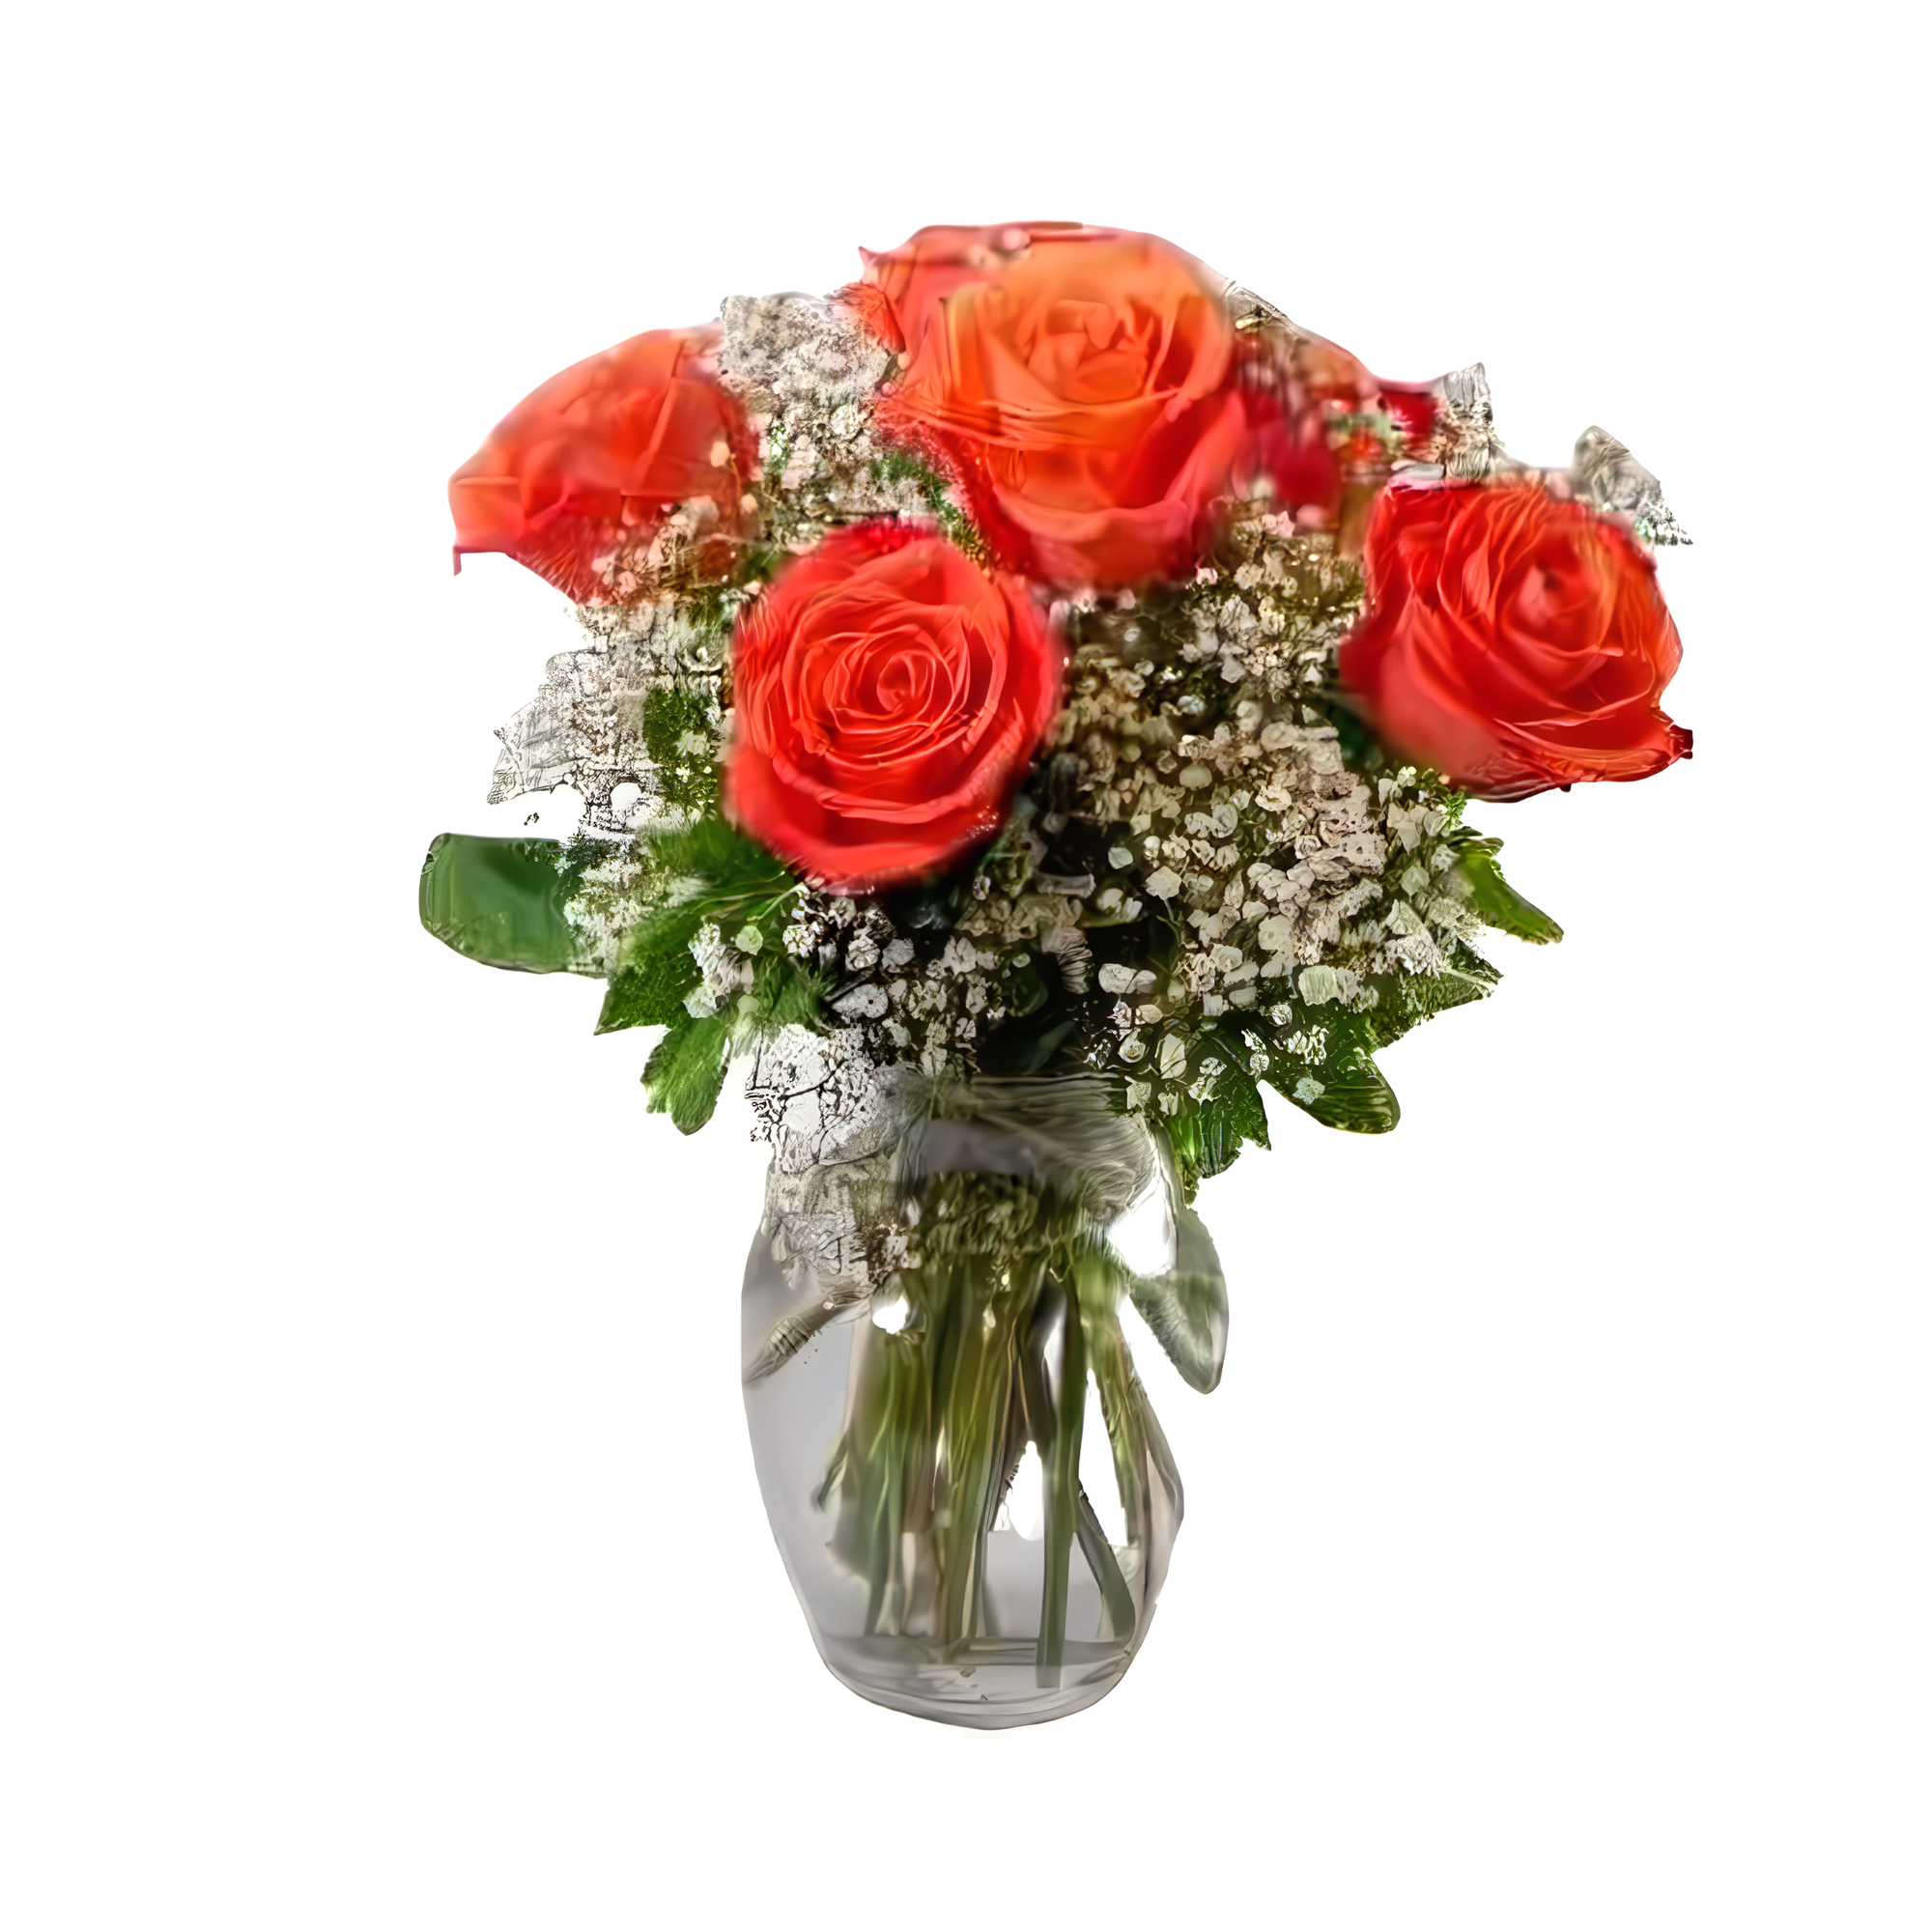 Manhattan Flower Delivery - Love's Embrace Roses Orange - Roses